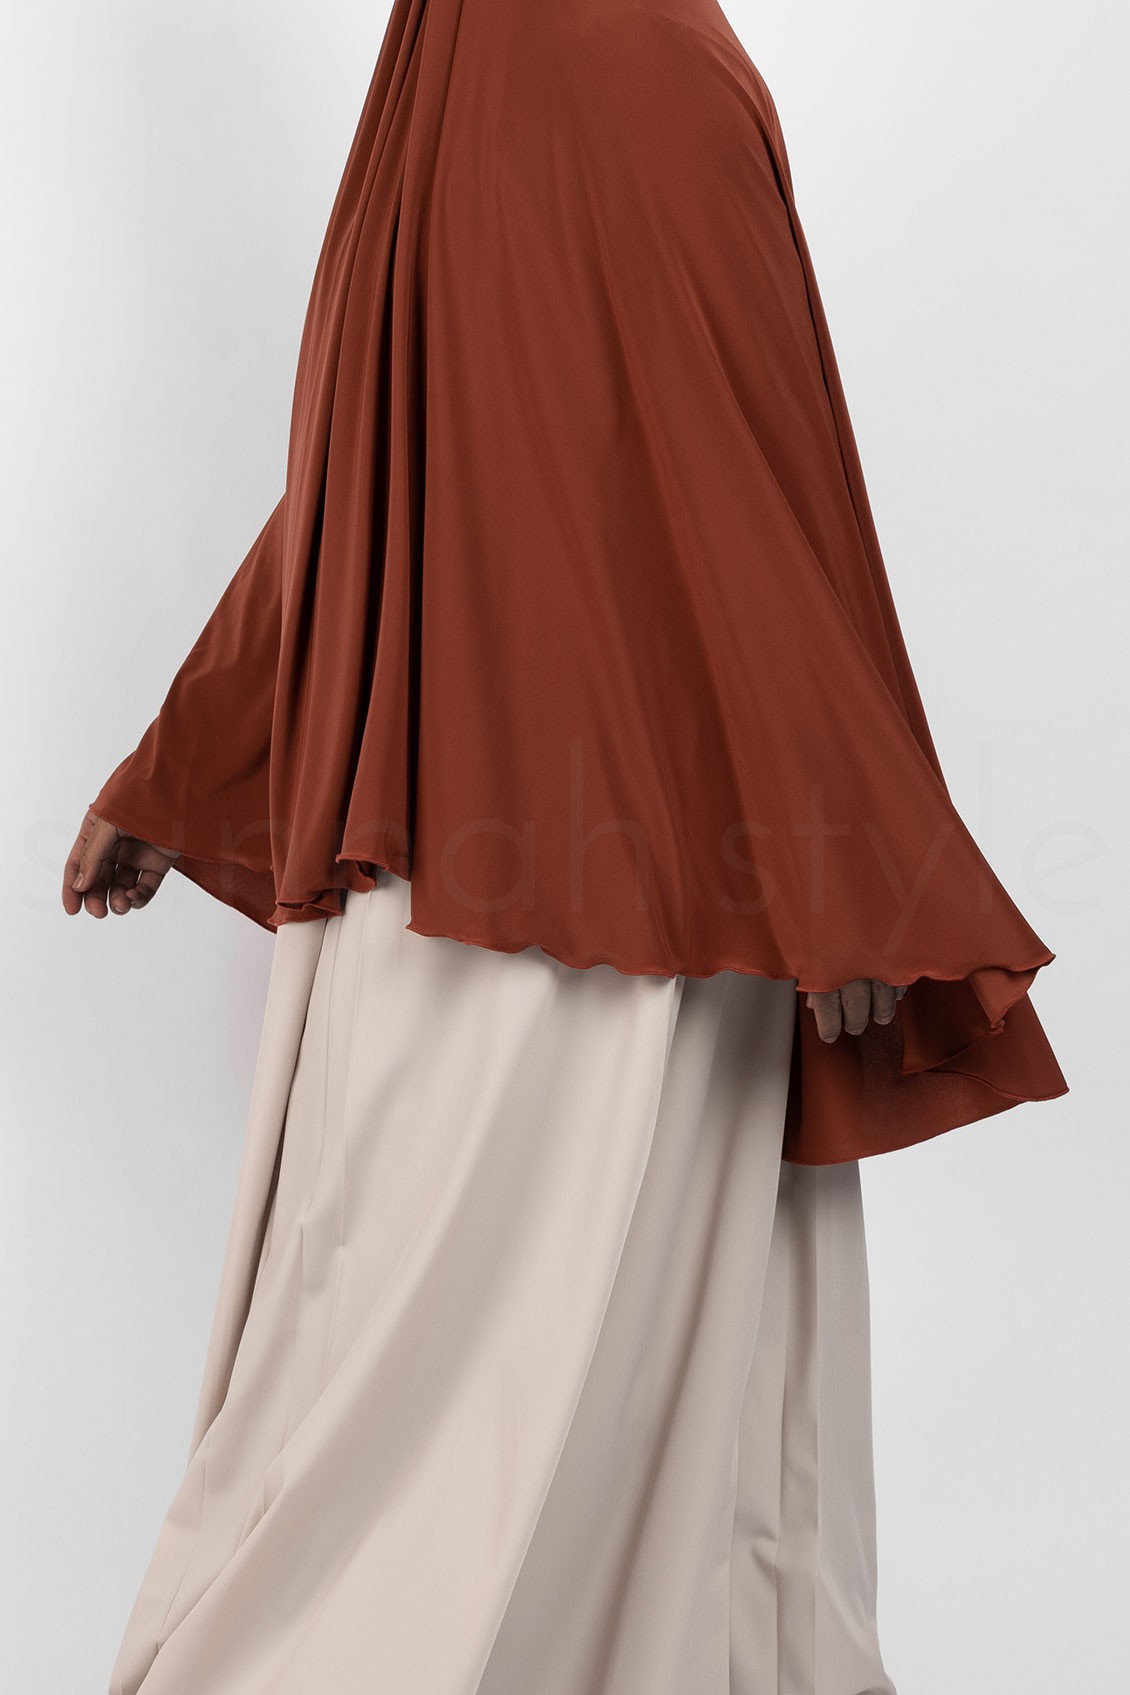 Sunnah Style Jersey Khimar Thigh Length Dark Amber